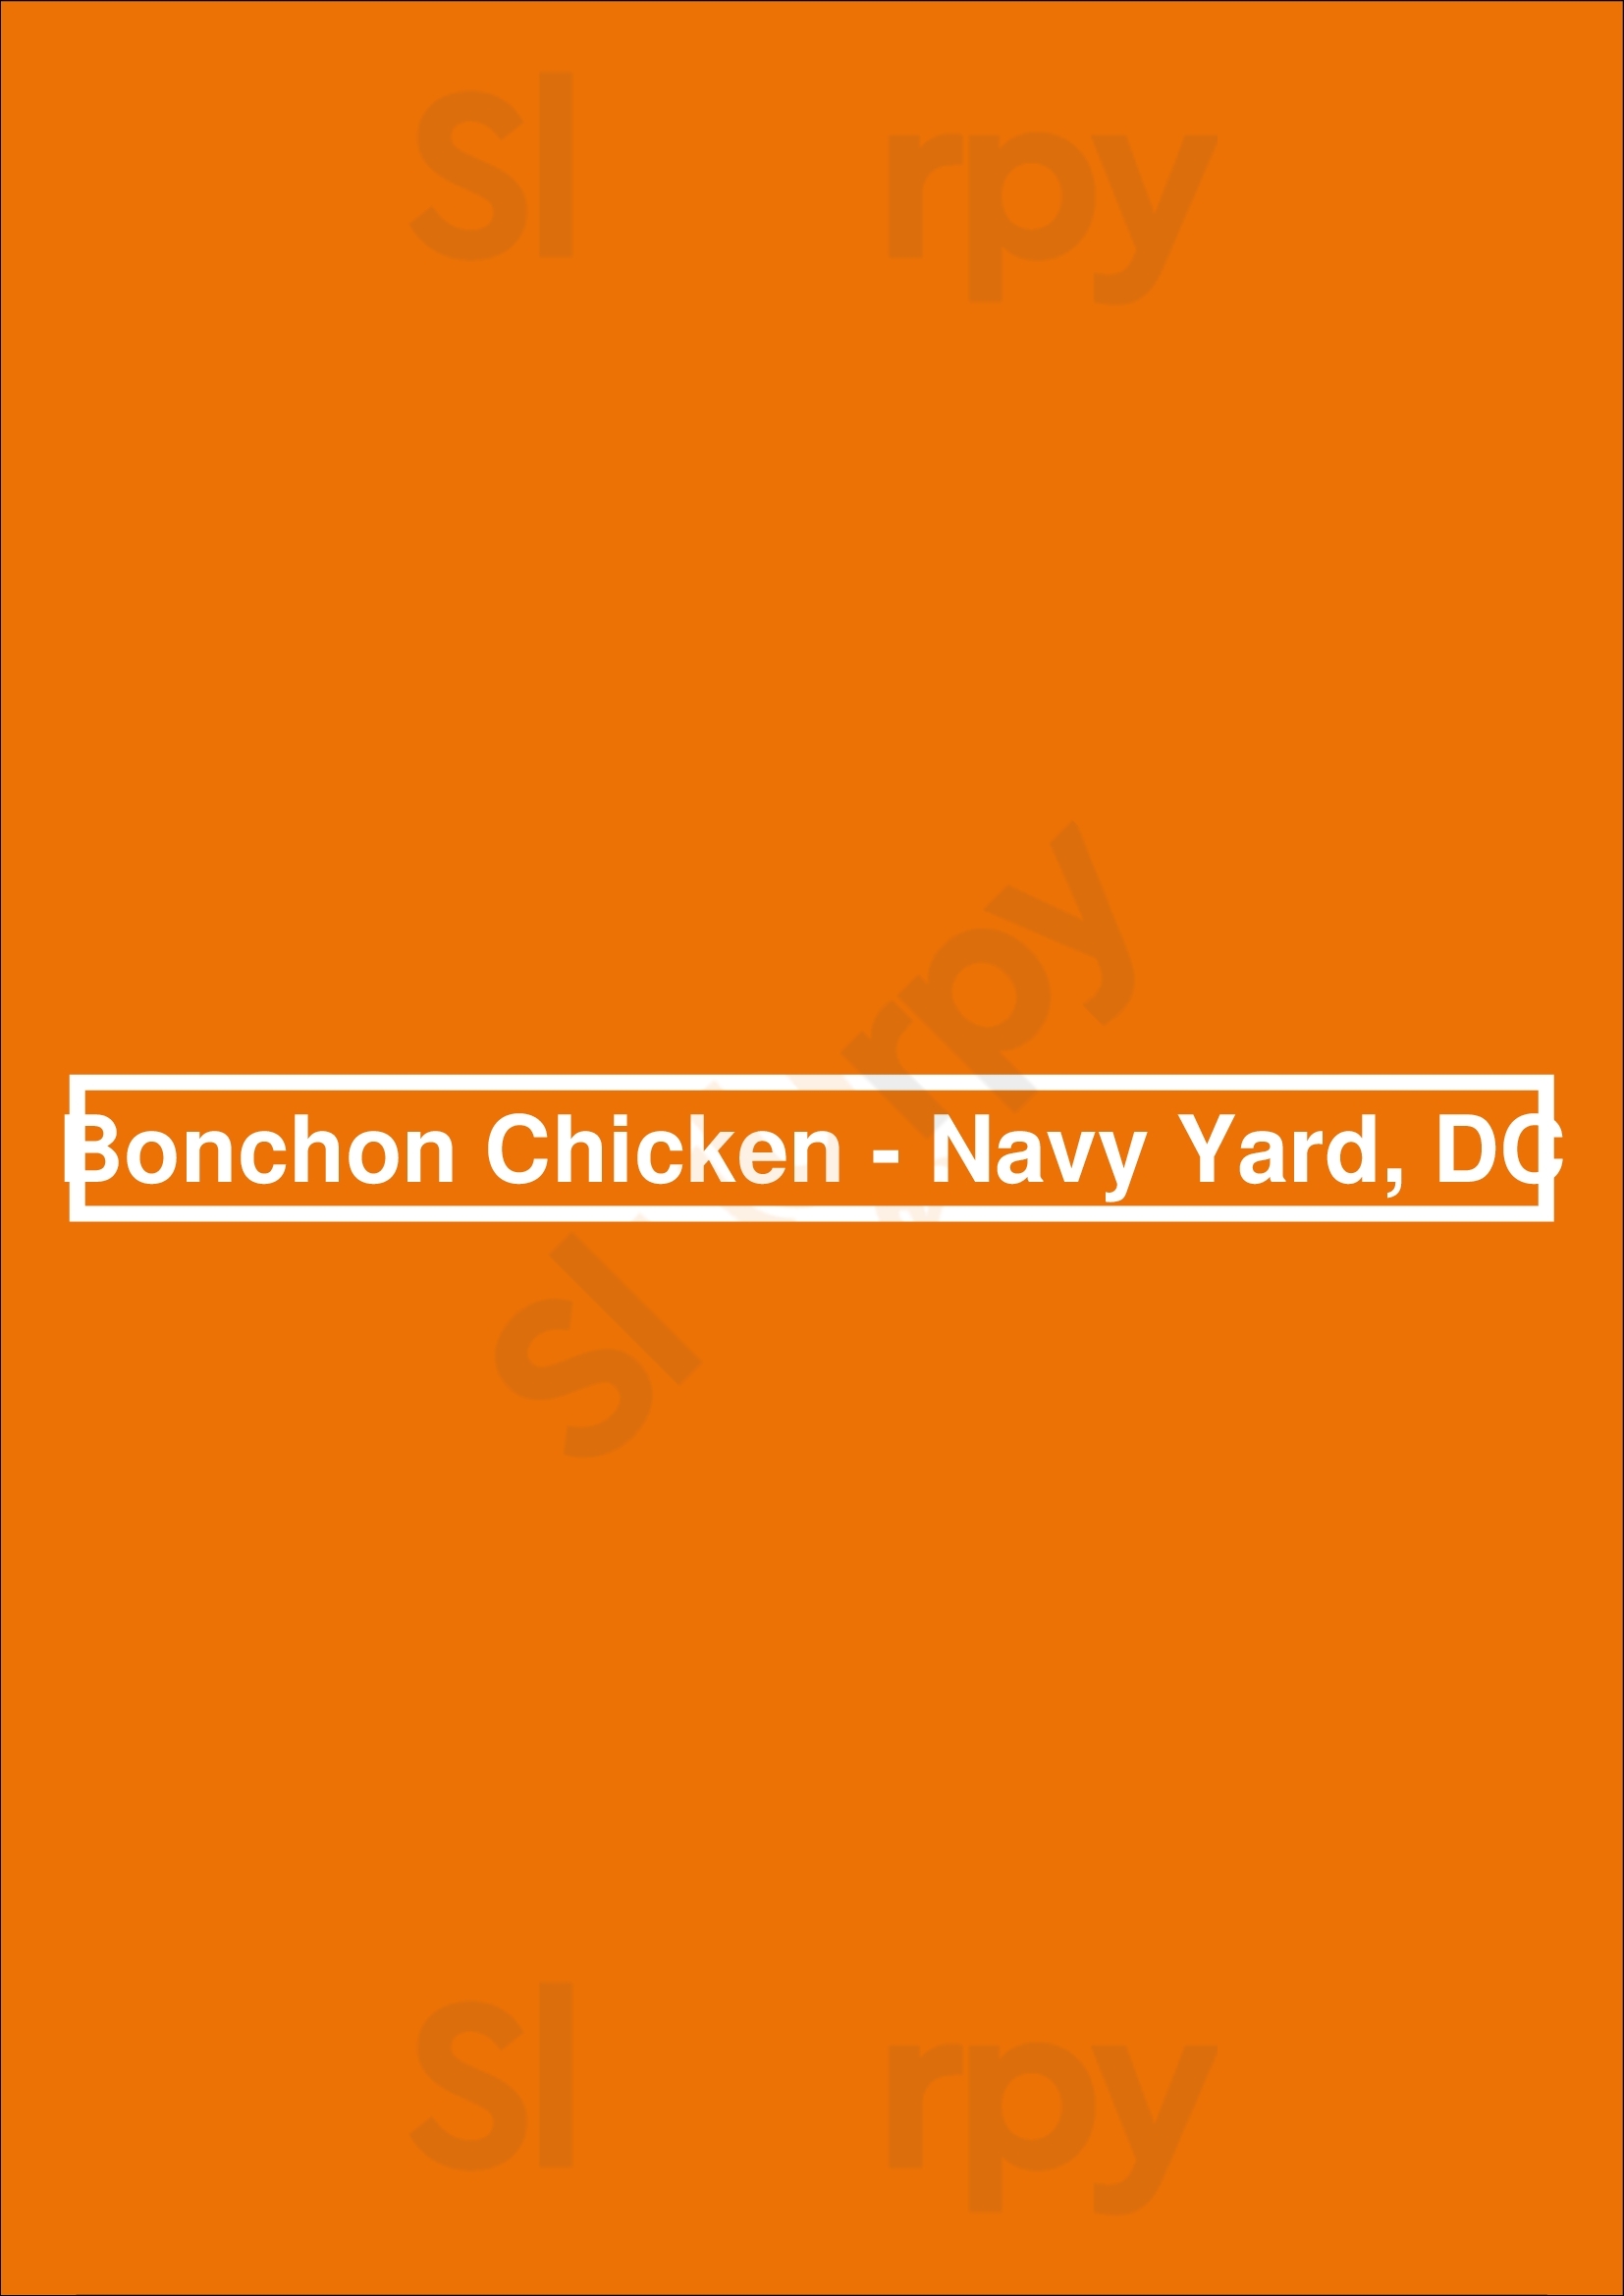 Bonchon Chicken - Navy Yard, Dc Washington DC Menu - 1